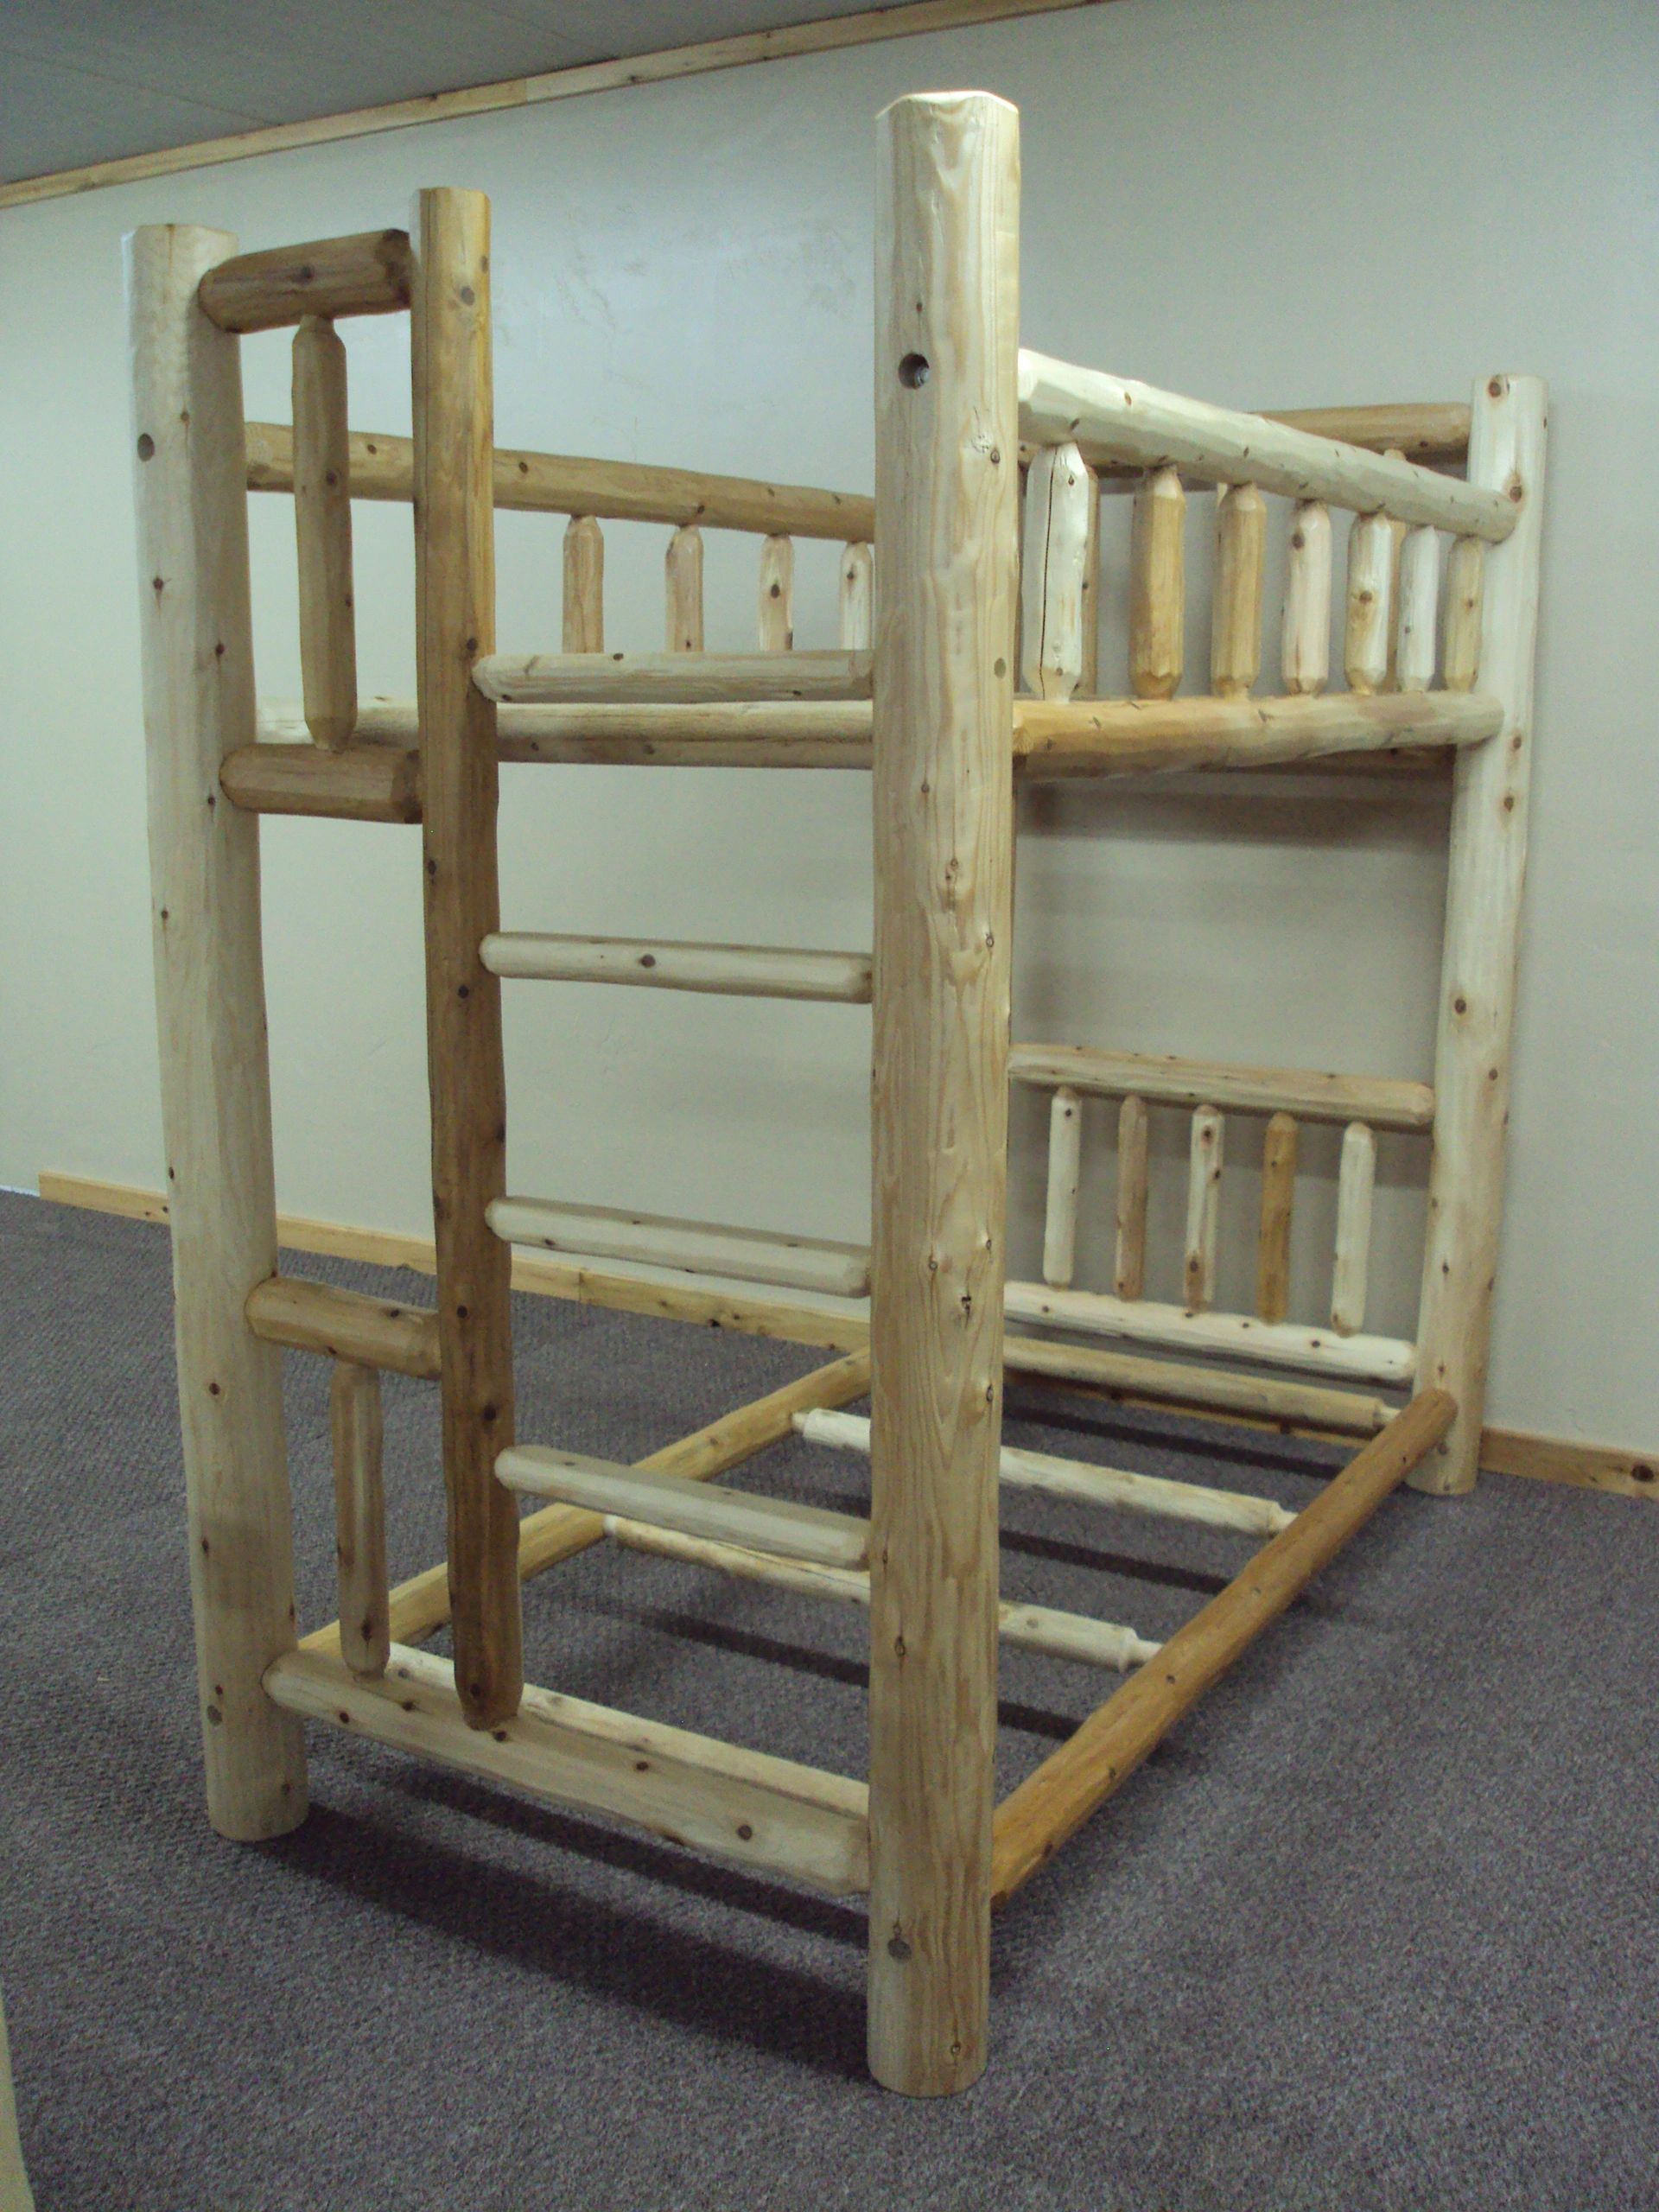 Cedar Log Bunk Bed Bedroom Rustic Furniture Twin Over Twin Full Double Queen With Ladder Built In